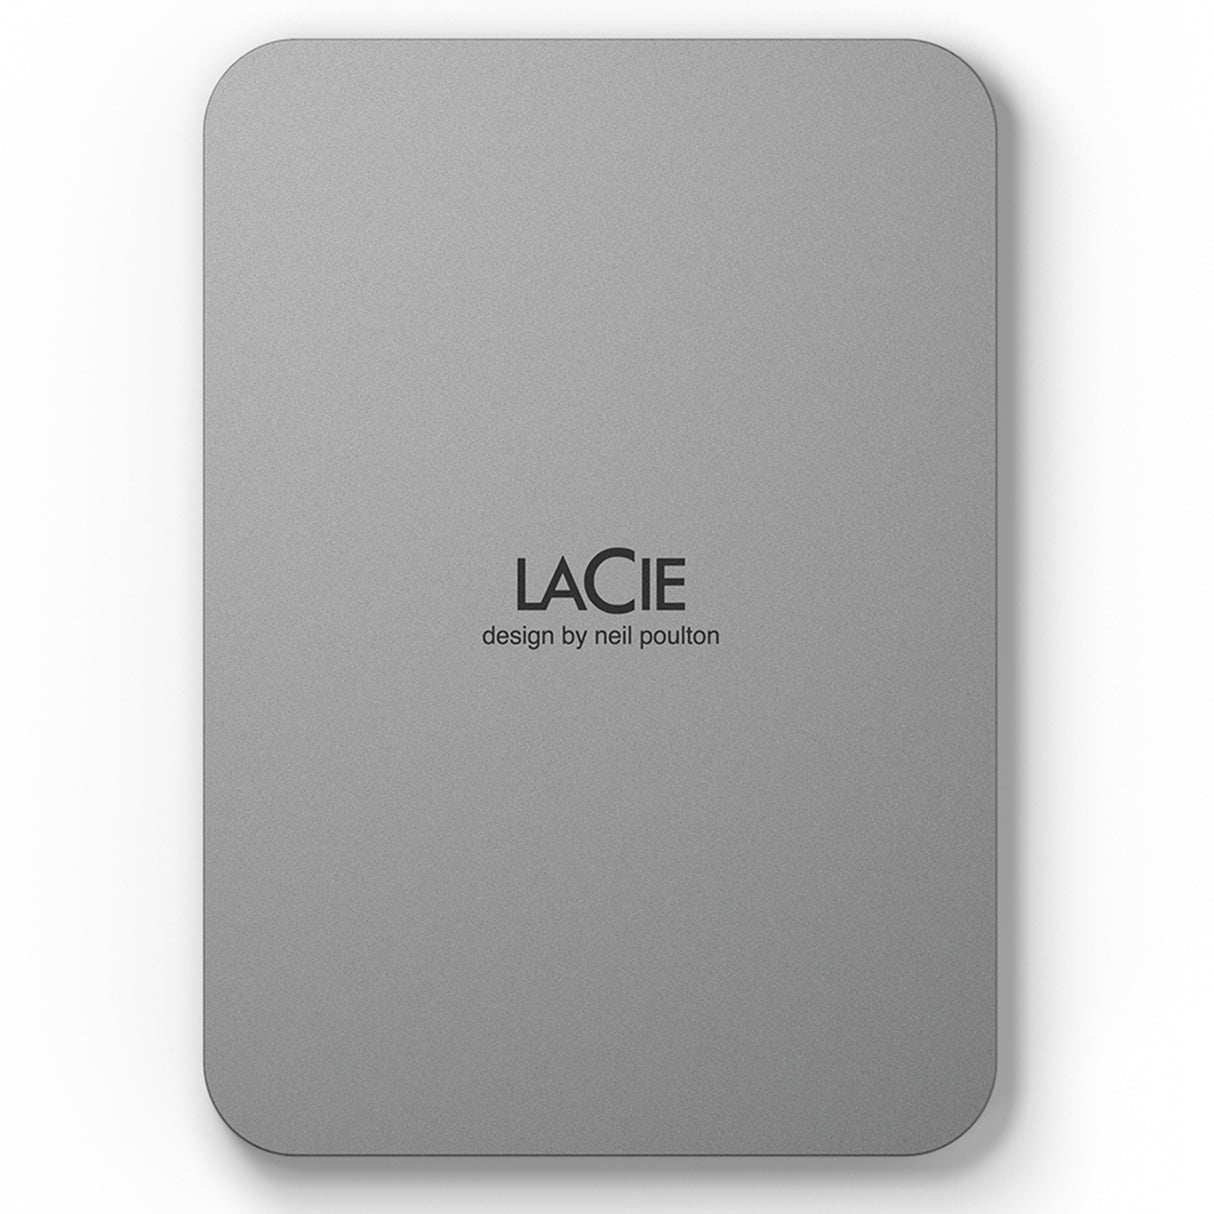 LaCie Mobile Drive External Hard Drive